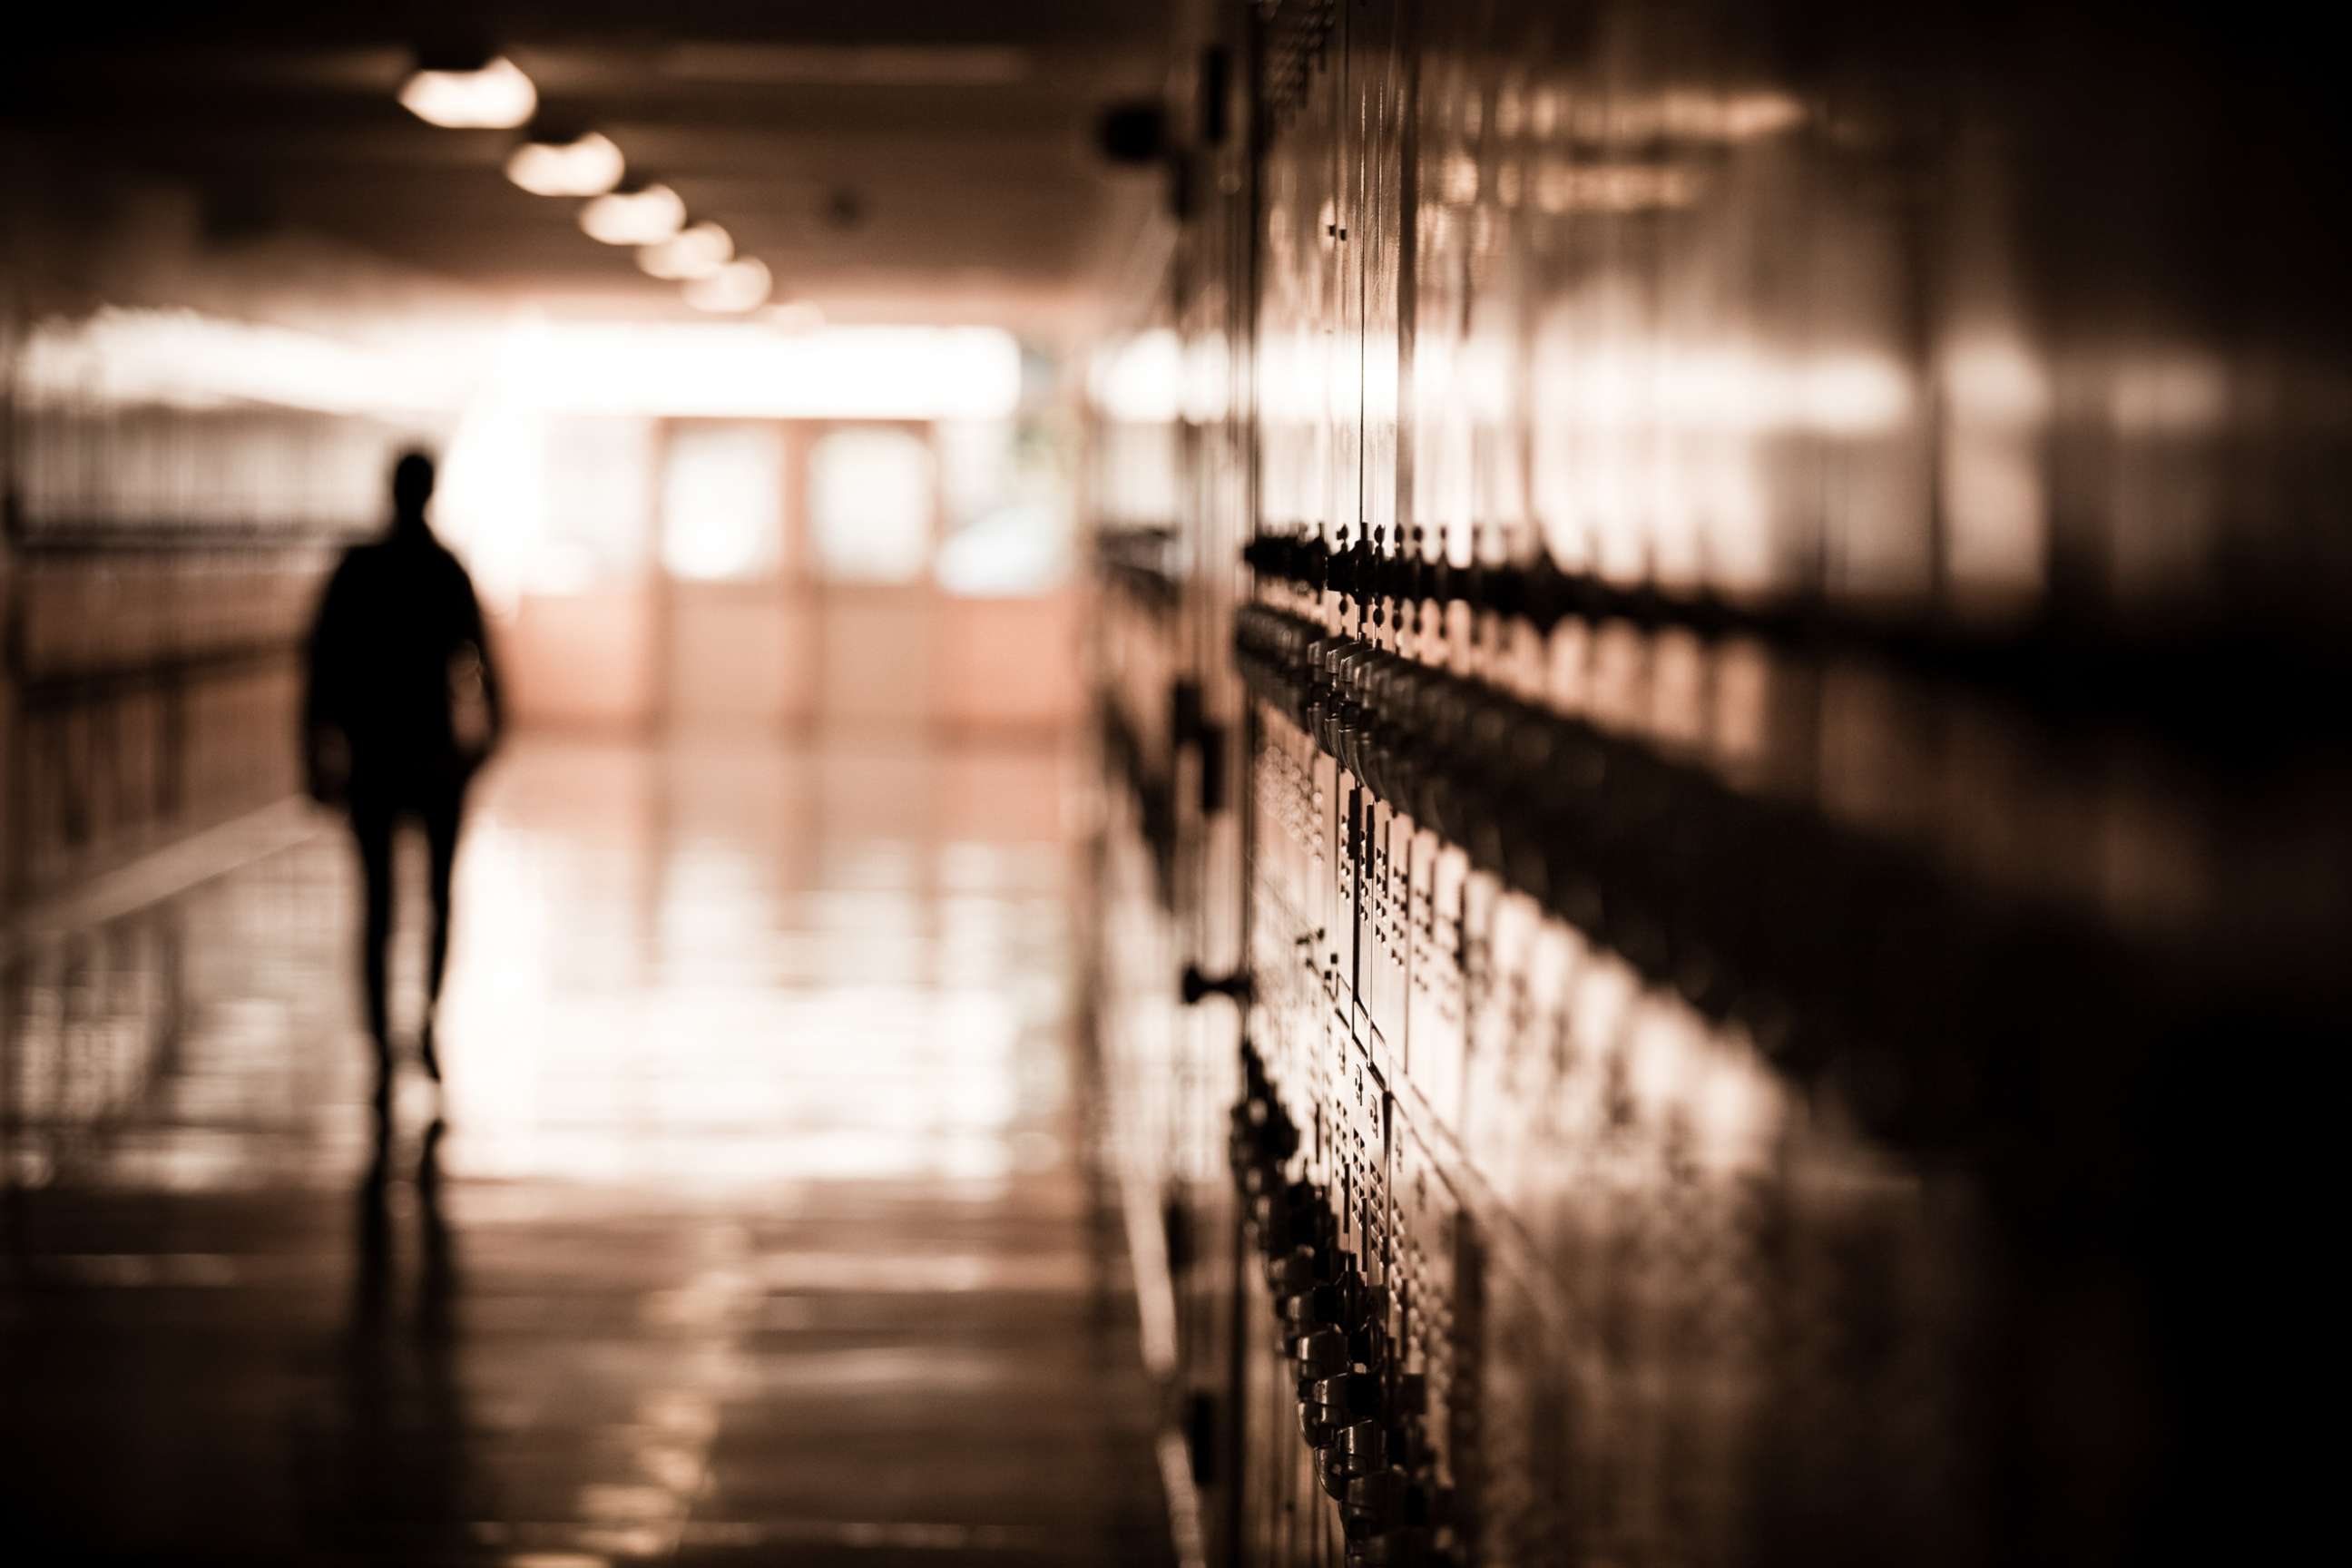 PHOTO: A high school student walks down a dark hallway in a public high school in this undated stock photo.